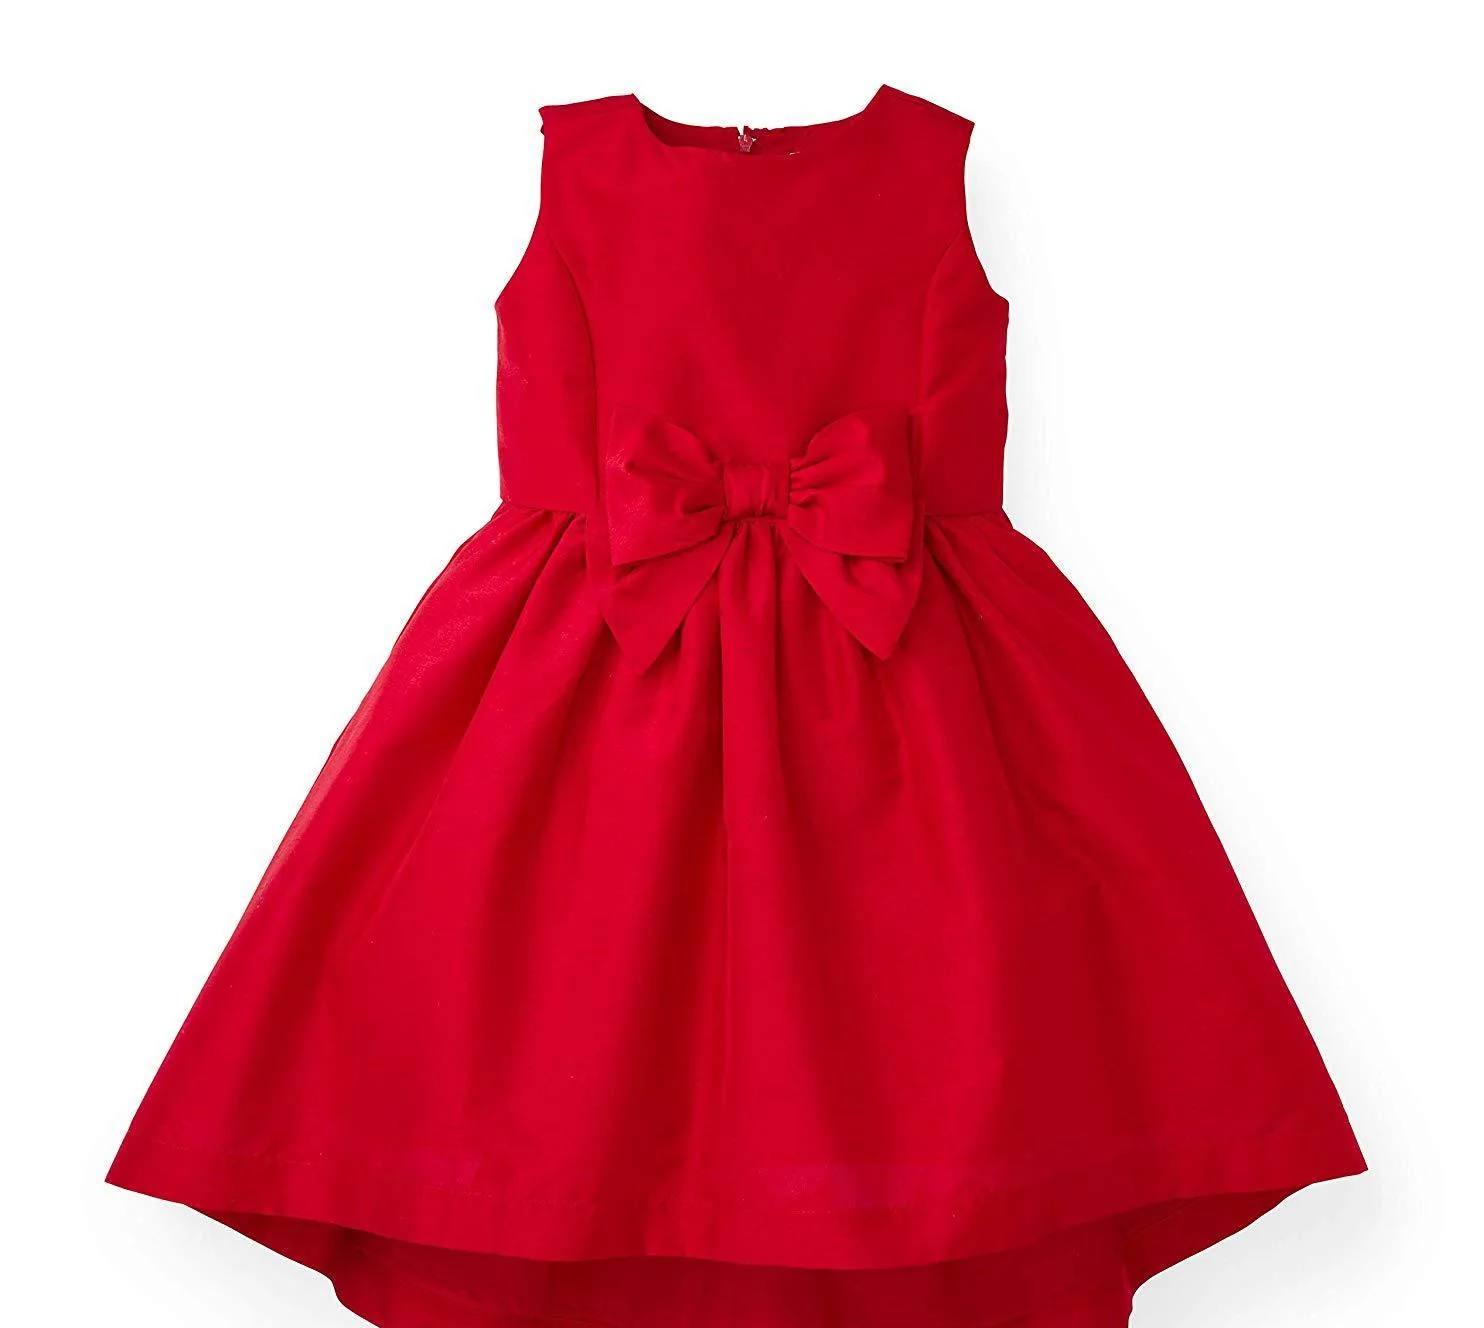 Camisa roja niño H&M formal – Kima Shop HN